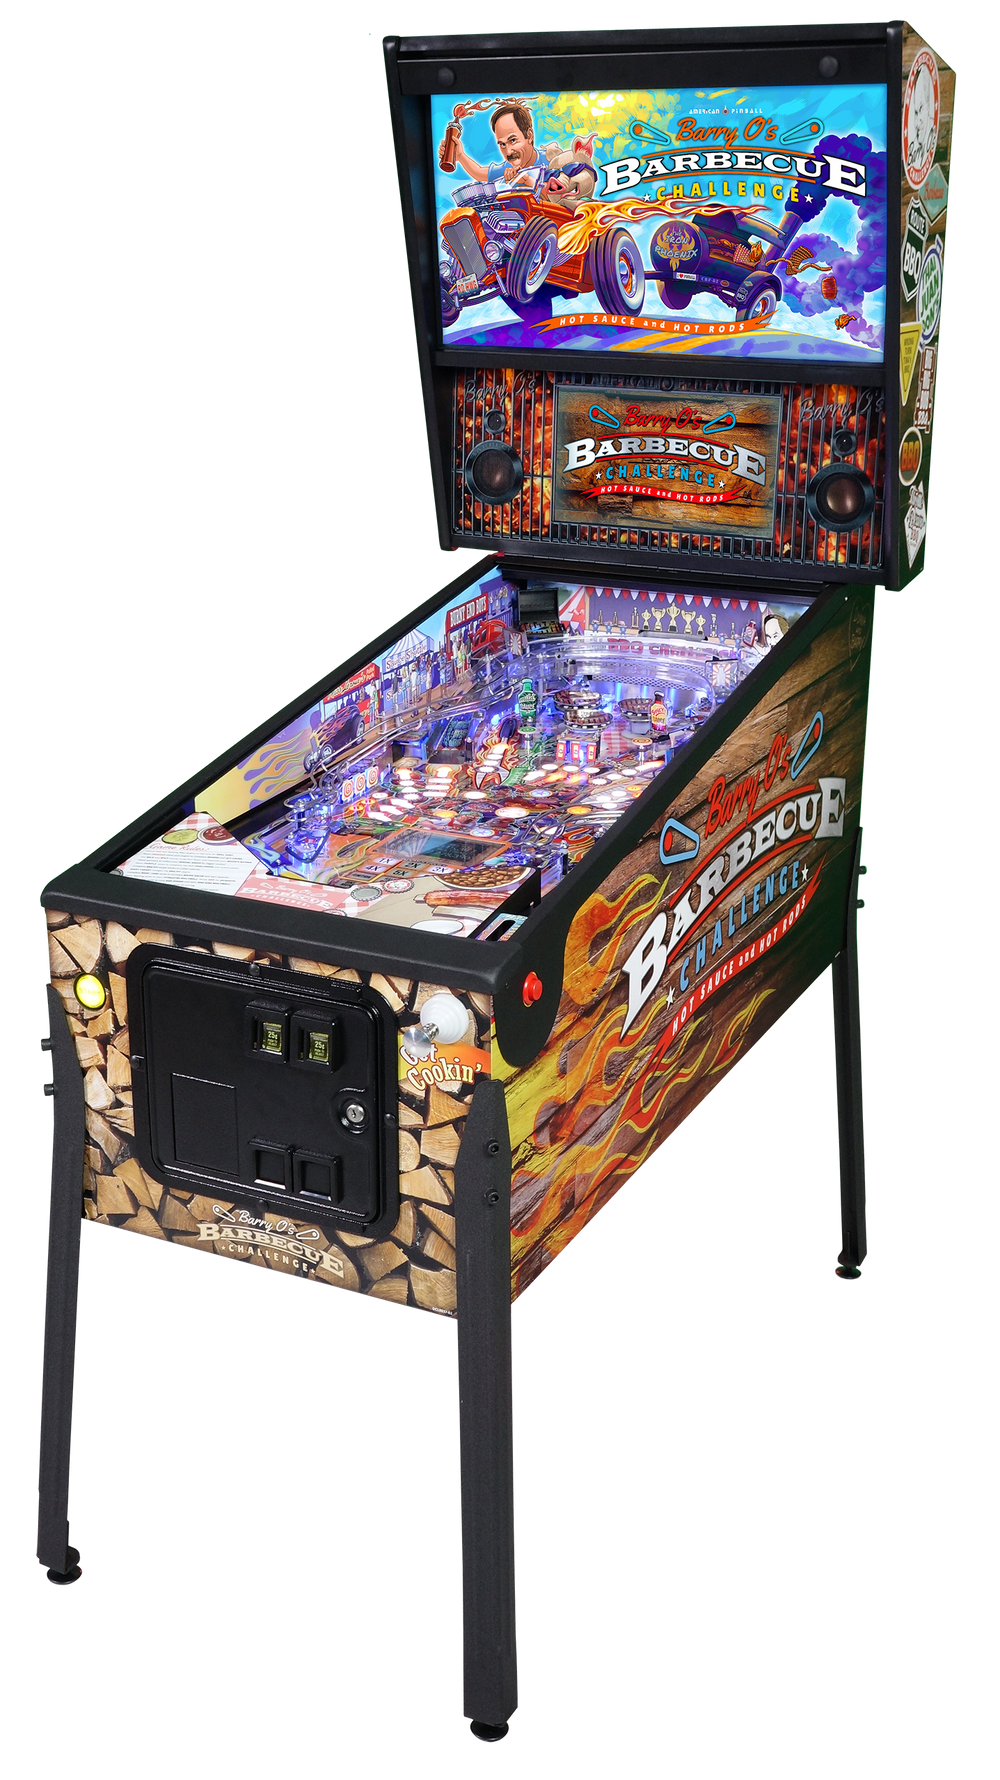 American Pinball Barry O's BBQ Challenge Pinball Machine-Pinball Machines-American Pinball-Classic-Game Room Shop